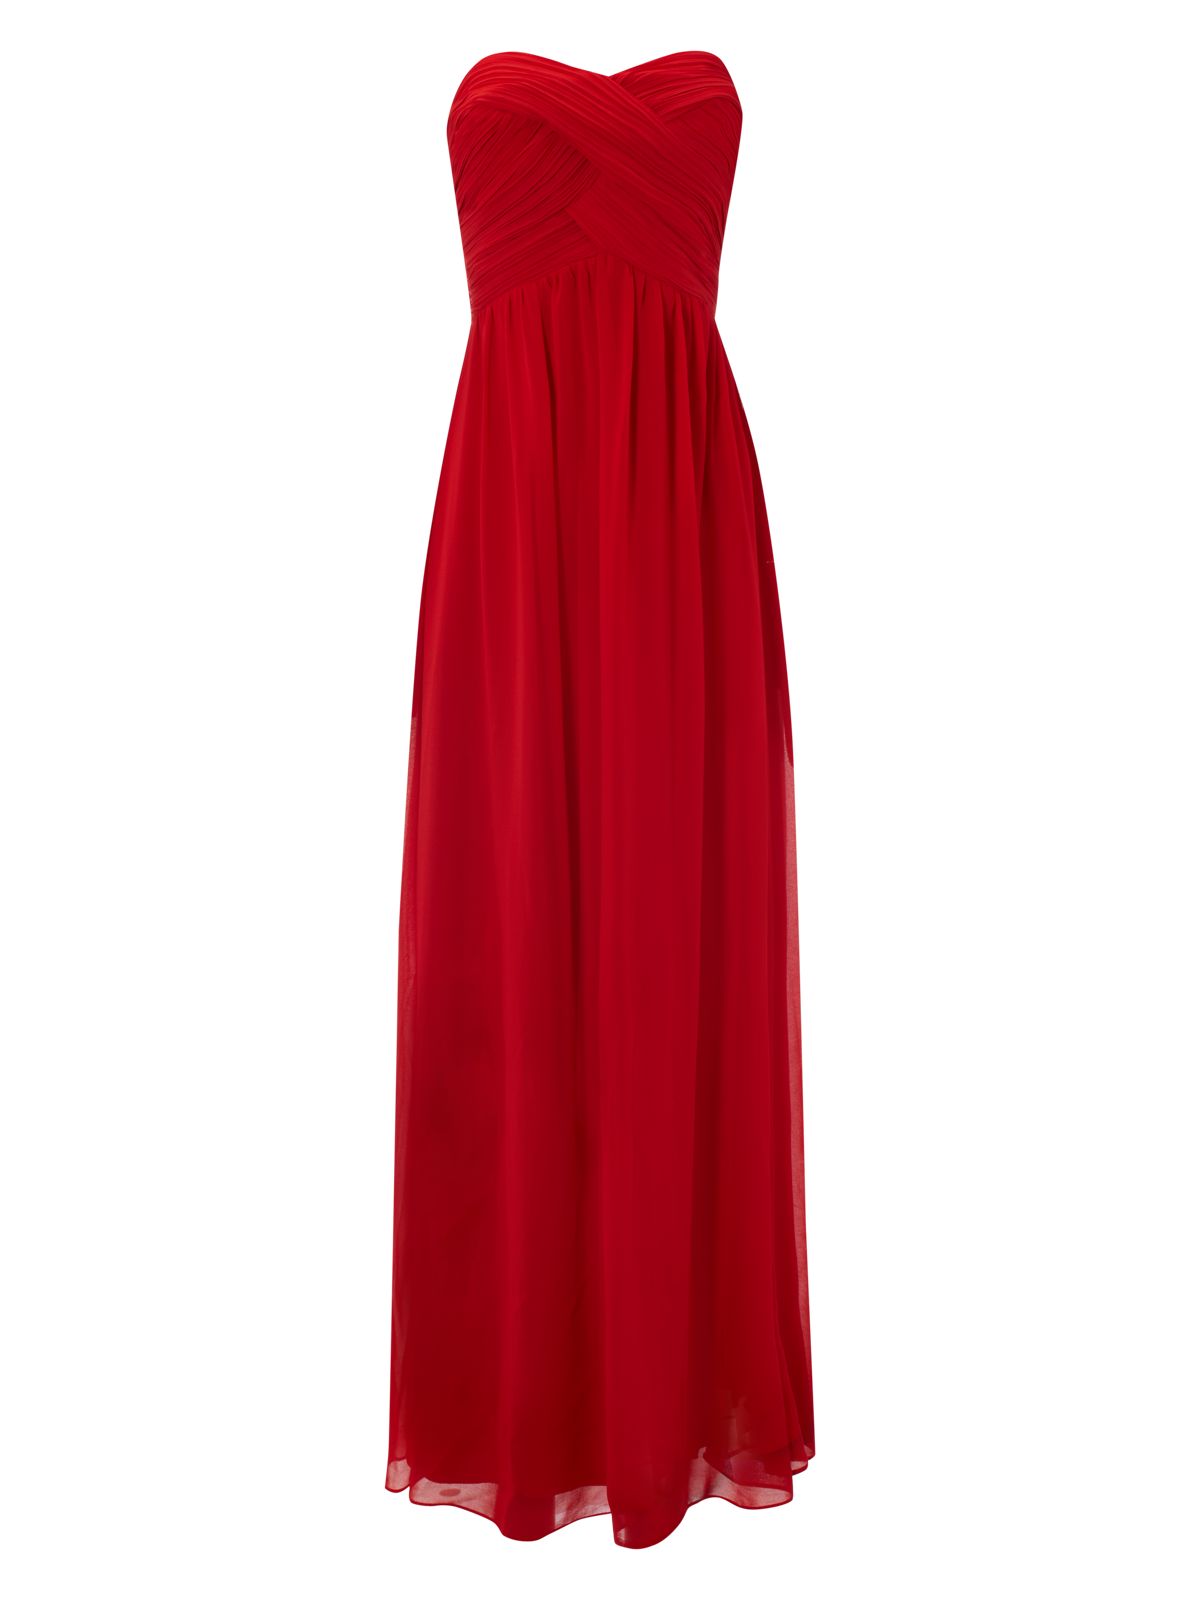 Jane Norman Pleat Bodice Maxi Dress in Red | Lyst